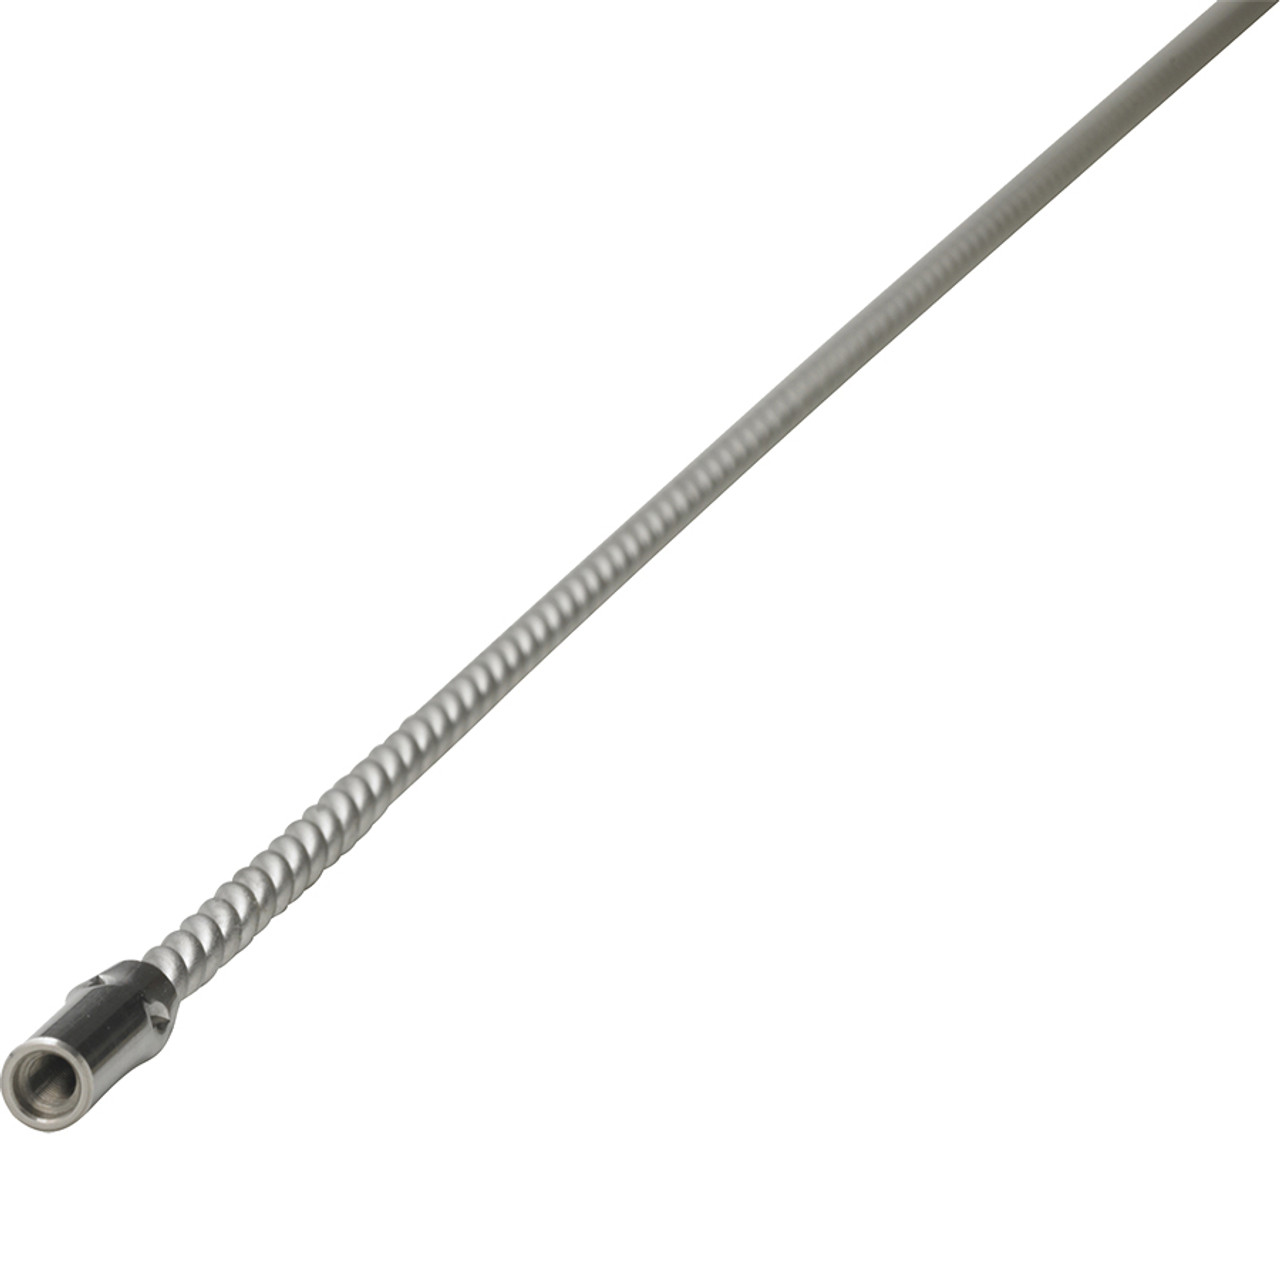 30.8 Stainless Steel Flex Rod Extension